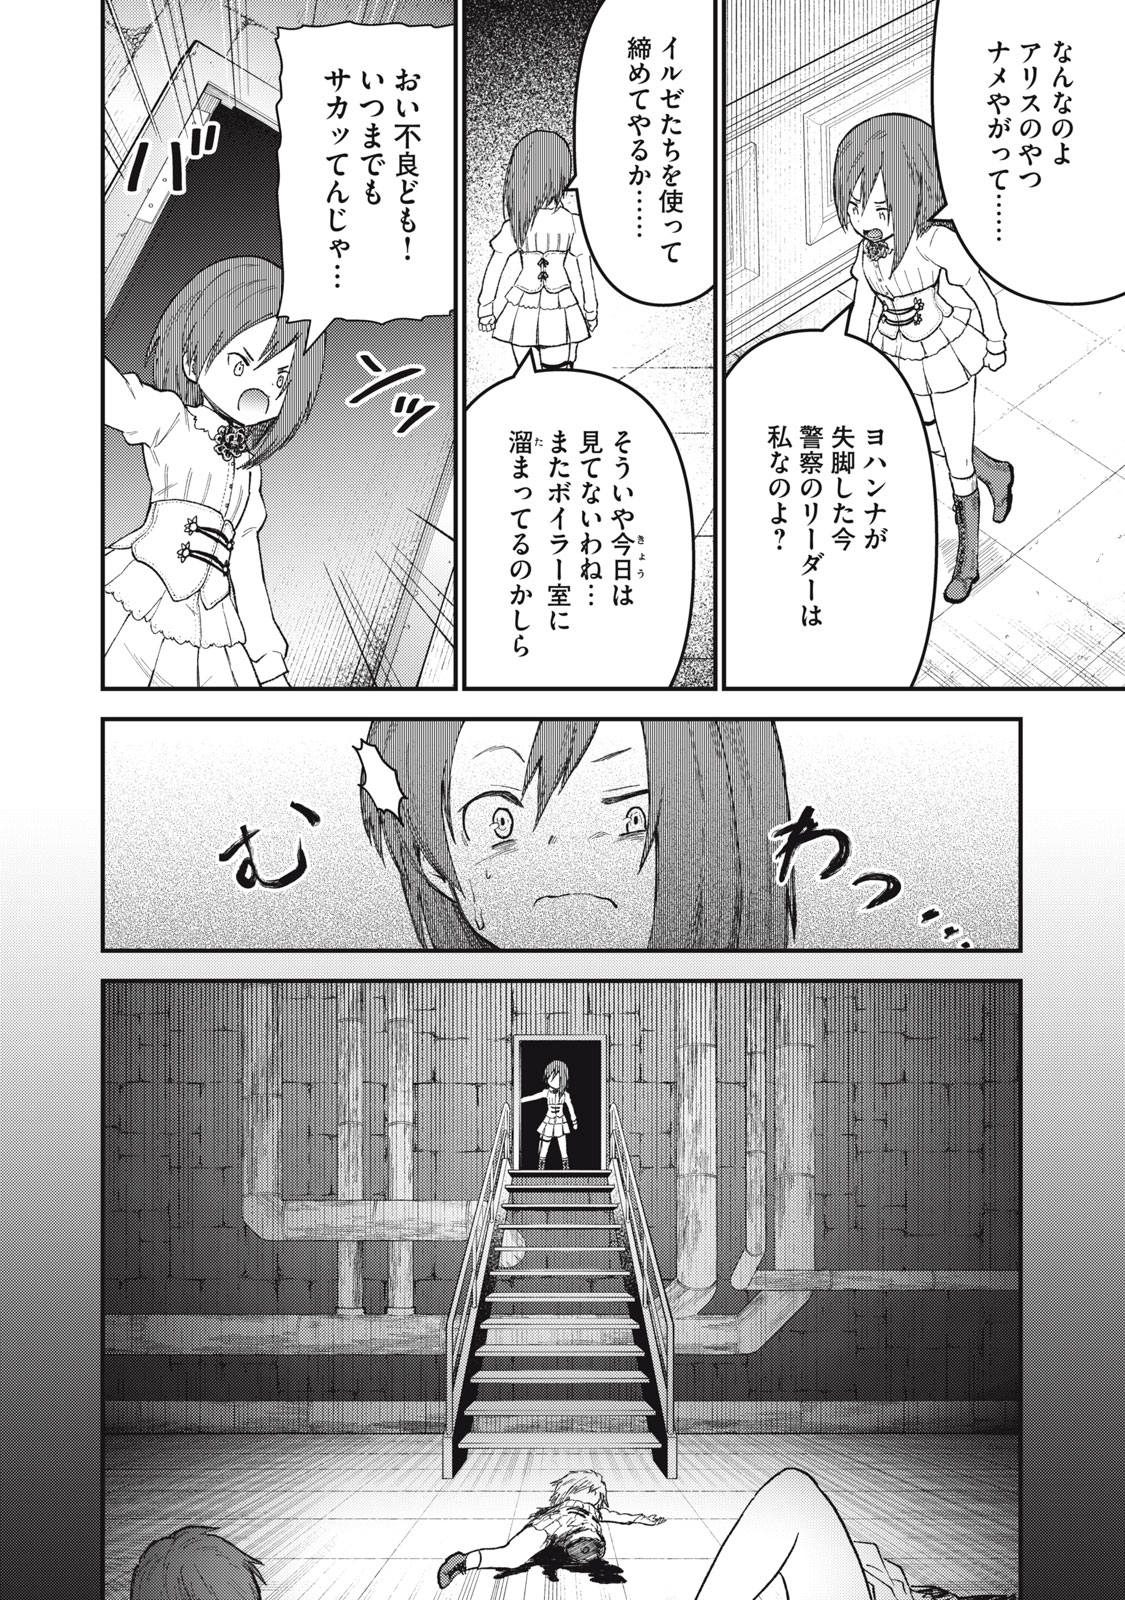 Itadaki no Lvitsa - Chapter 12 - Page 4